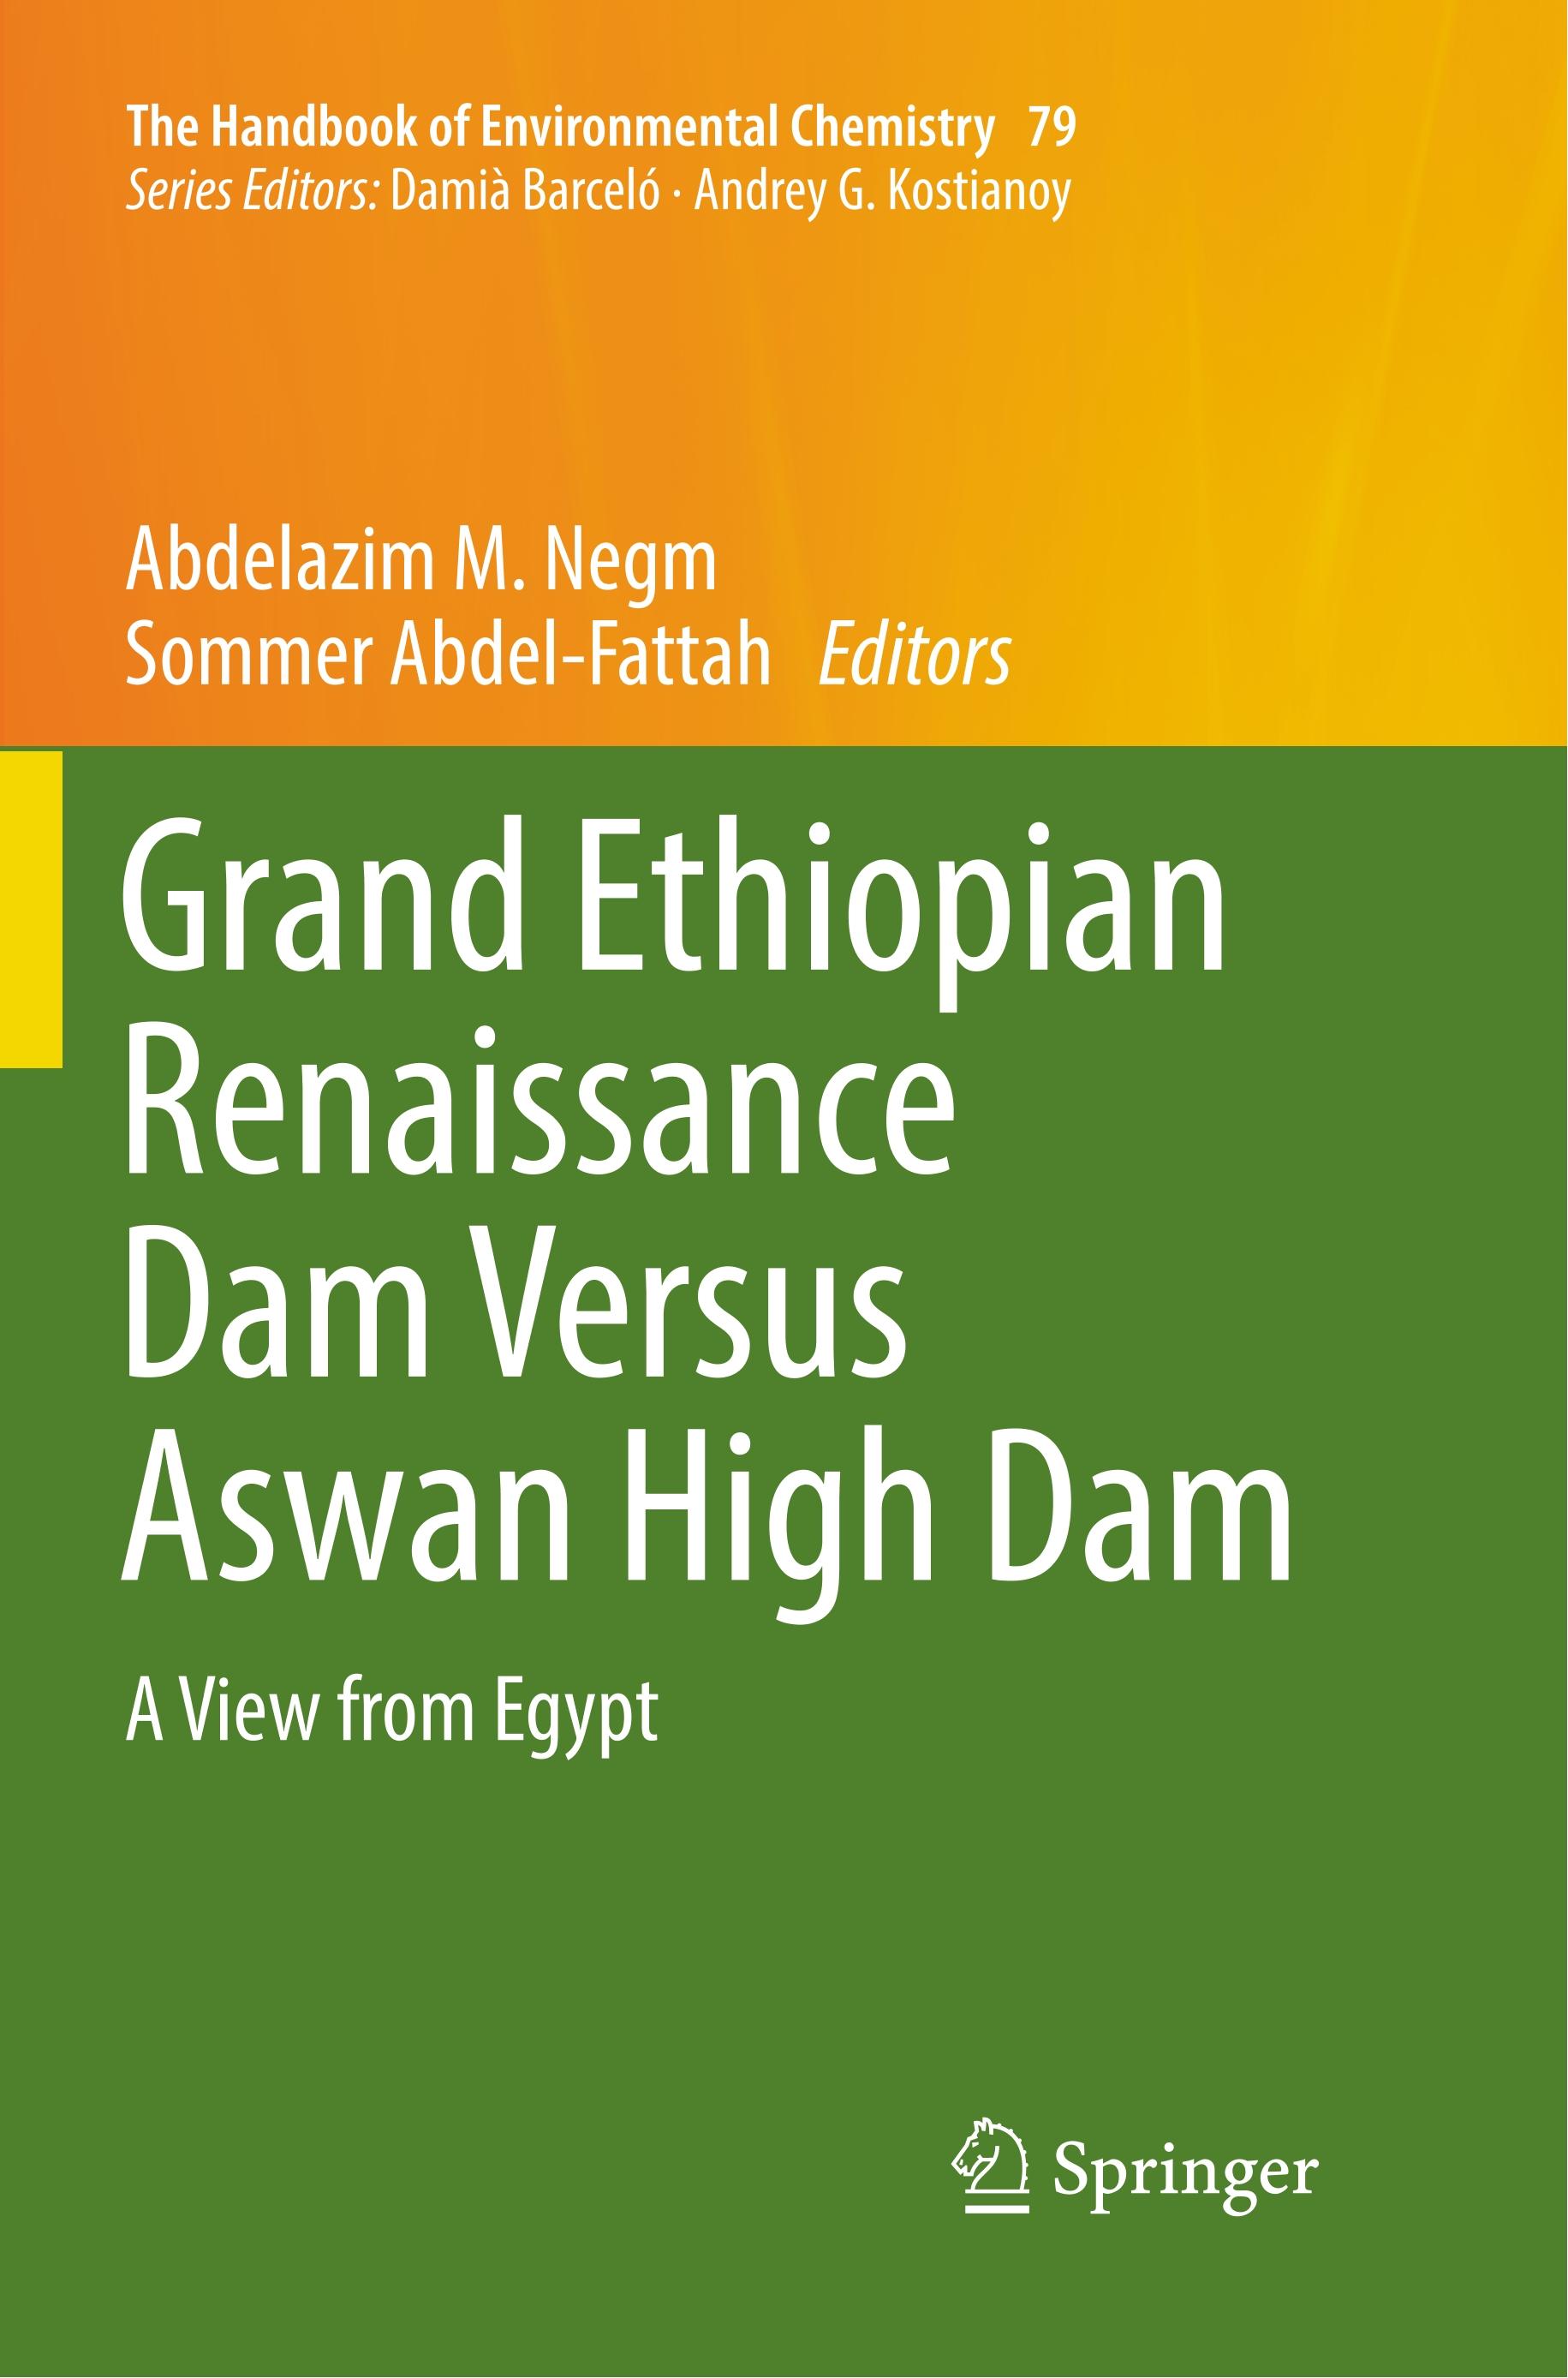 Grand Ethiopian Renaissance Dam Versus Aswan High Dam: A View from Egypt: 79 (The Handbook of Environmental Chemistry, 79)